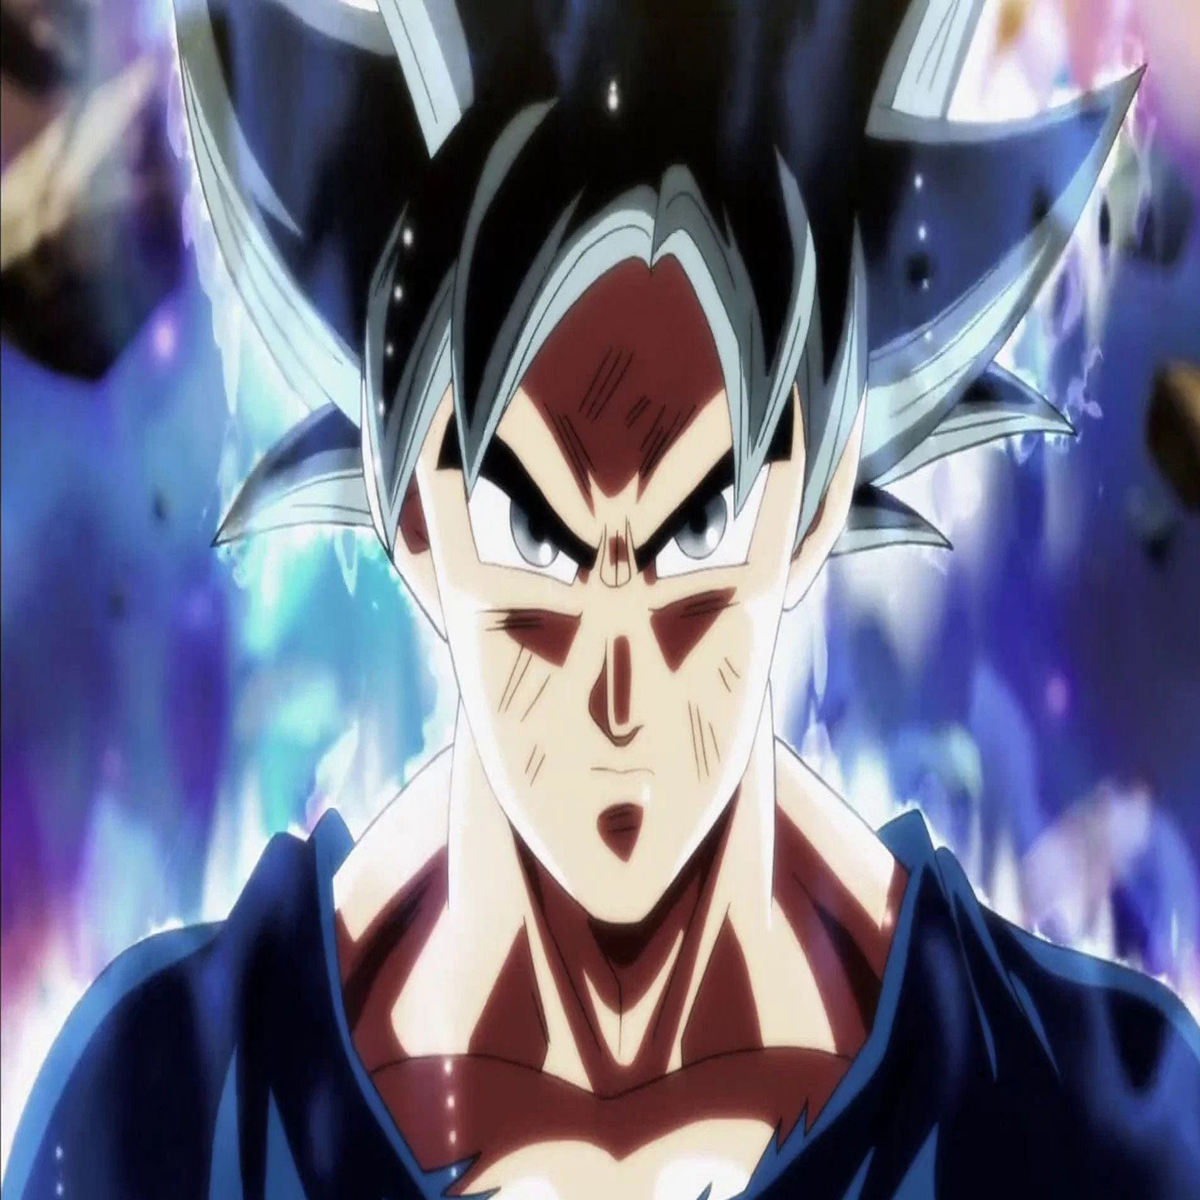 Dragon Ball Goku Ultra Instinct Super Saiyan Xbox Series X & S Skin